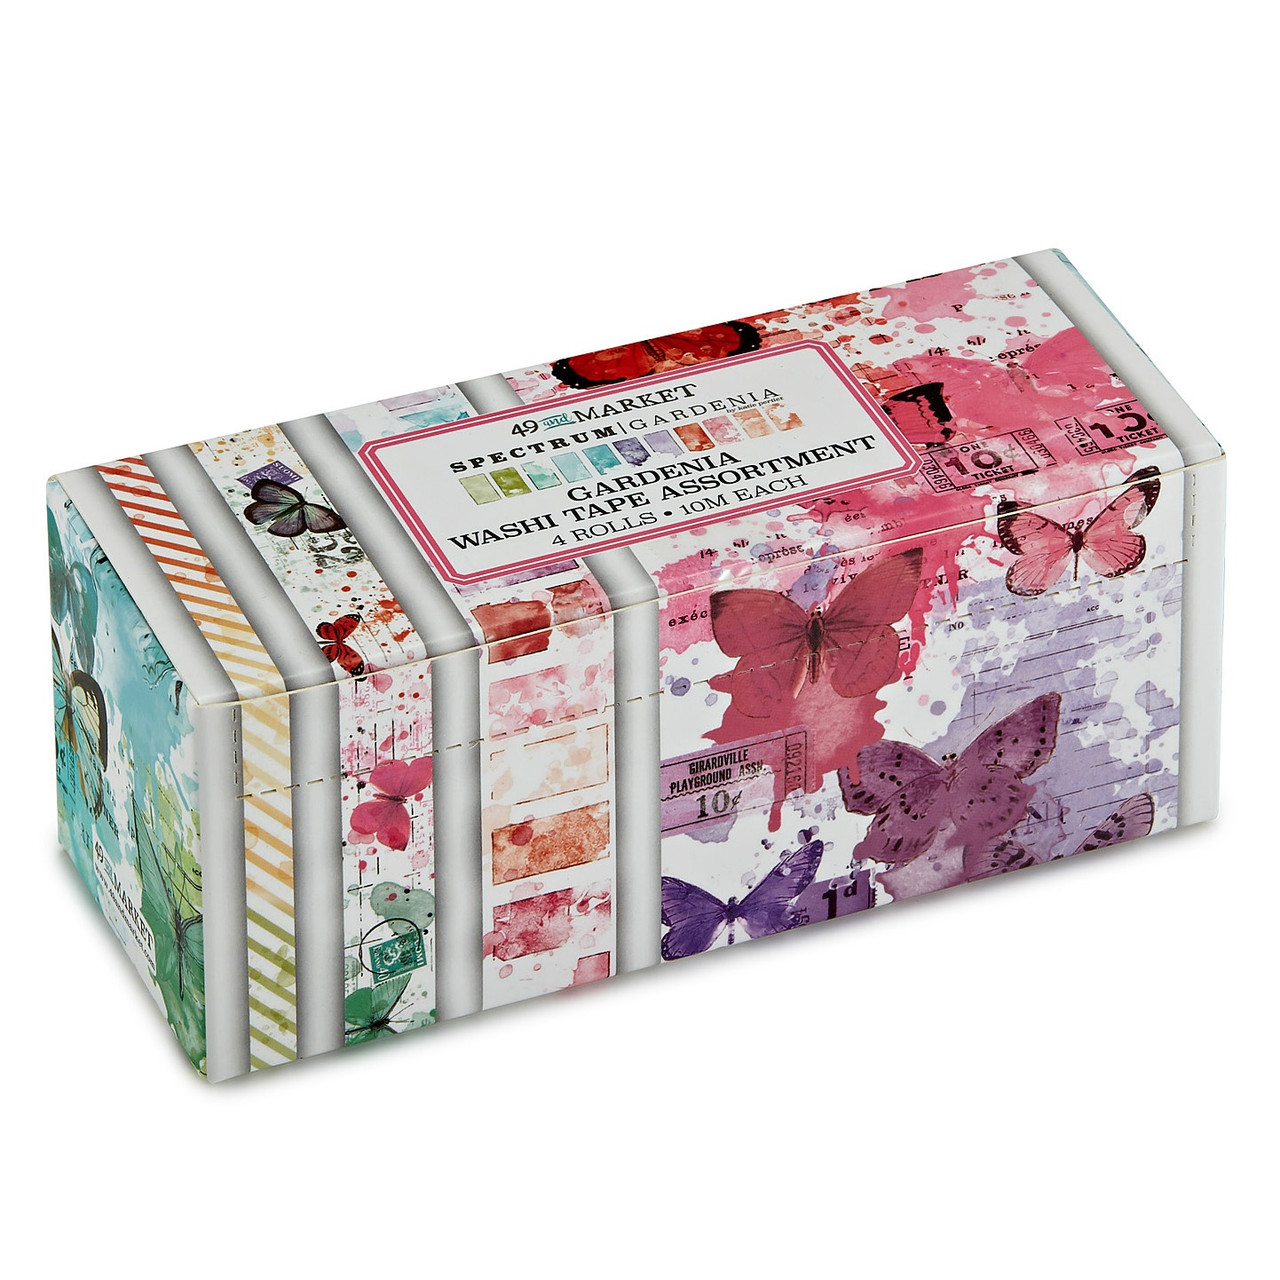 49 and Market Fabric Tape Assortment 4/Rolls-Spectrum Gardenia